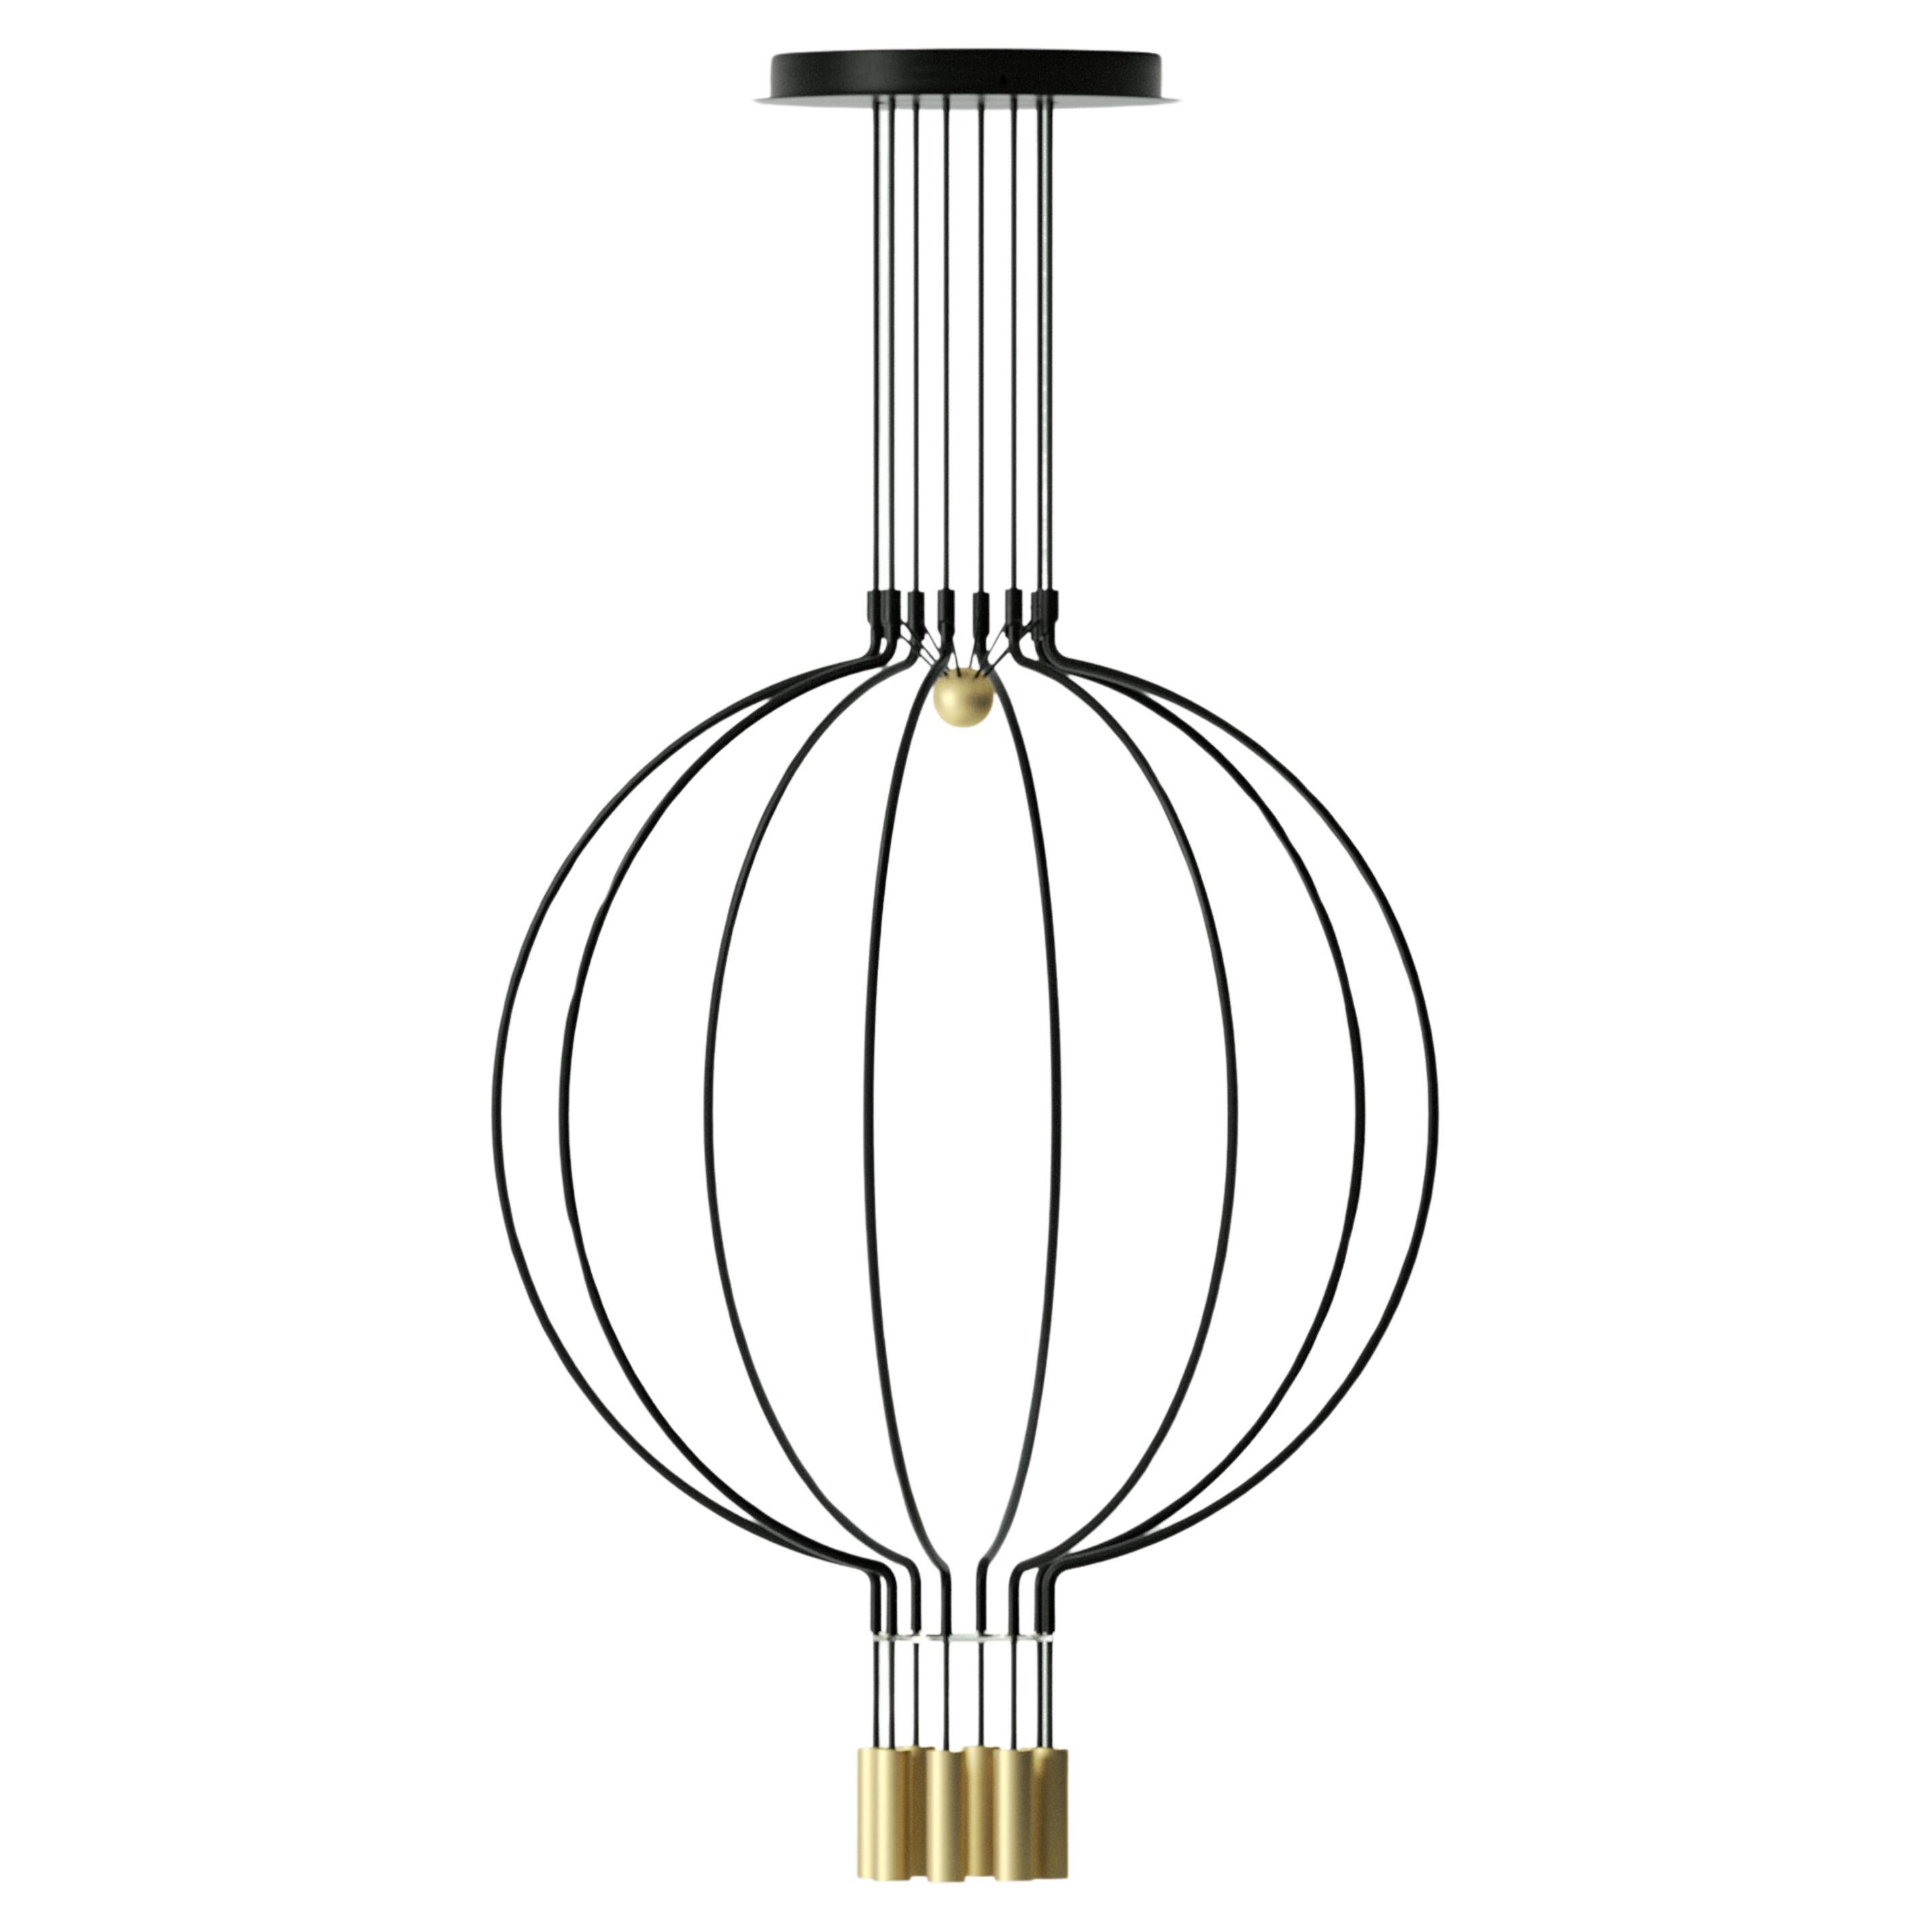 Axolight Liaison Model M8 Pendant Lamp in Black/Gold by Sara Moroni For Sale